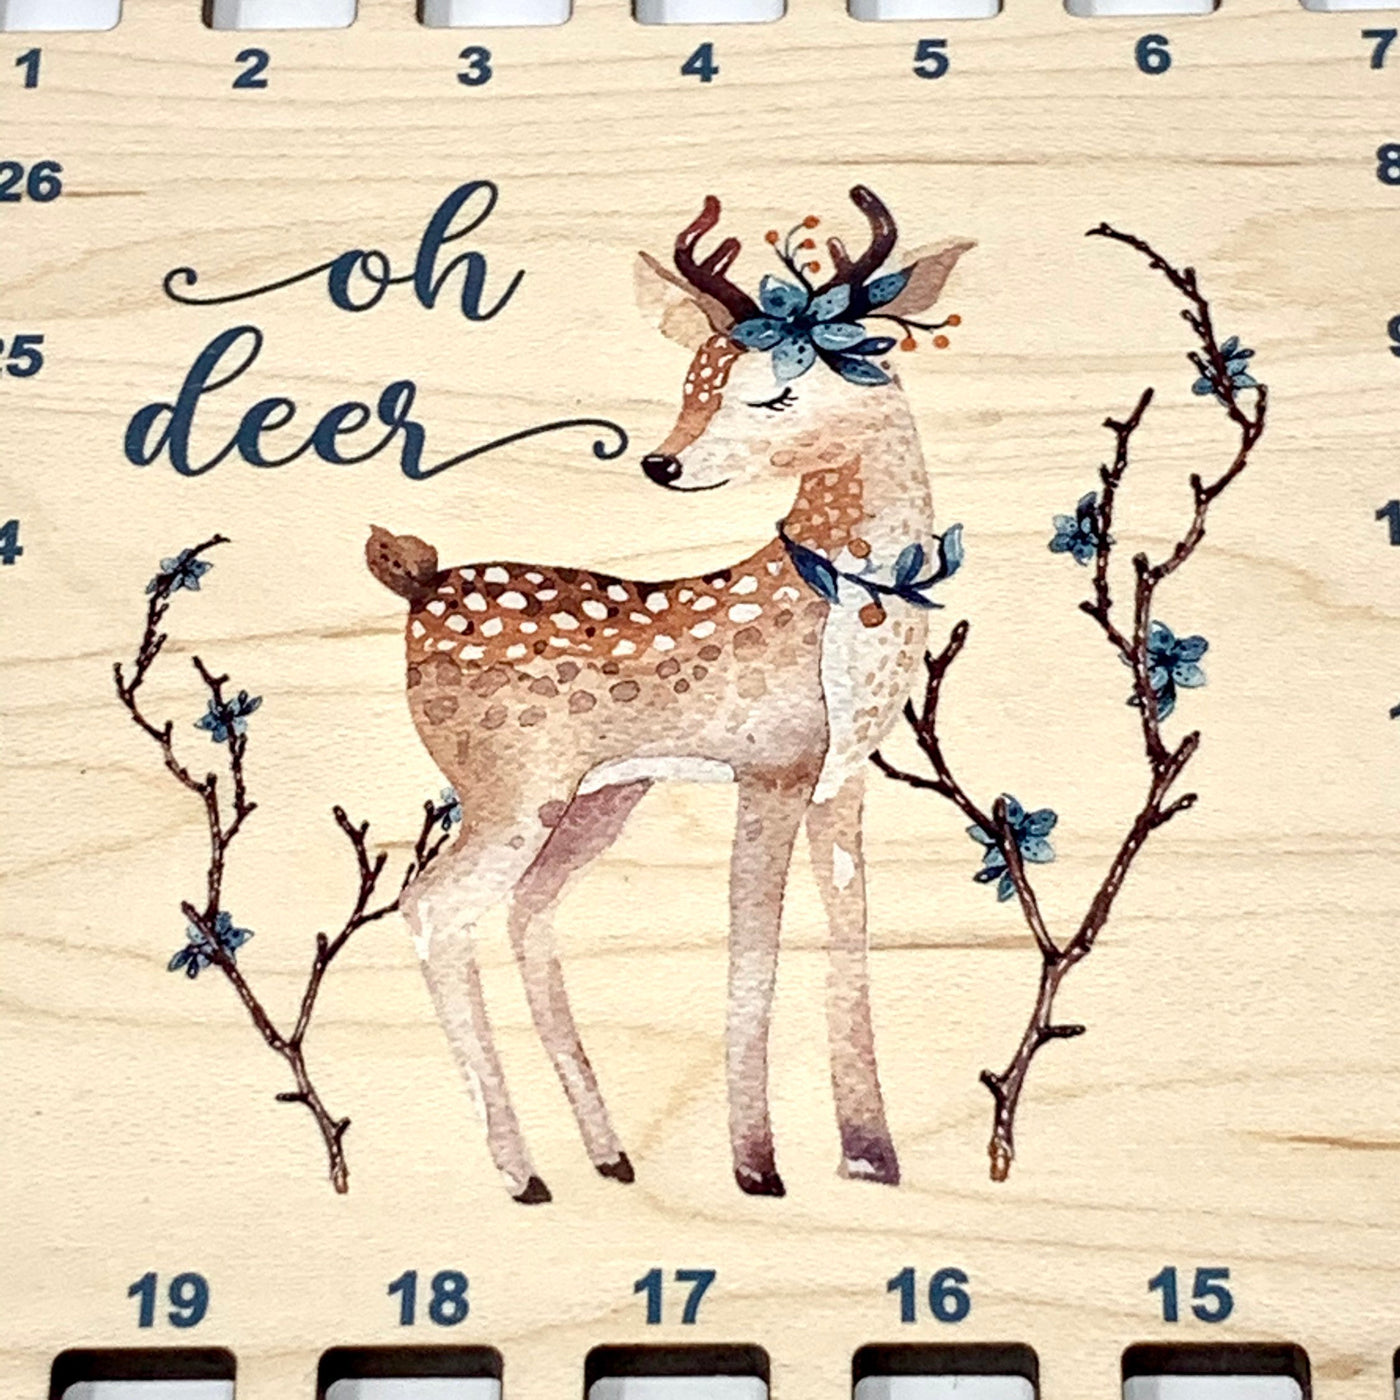 Oh Deer thread holder floss holder cross stitch organisation